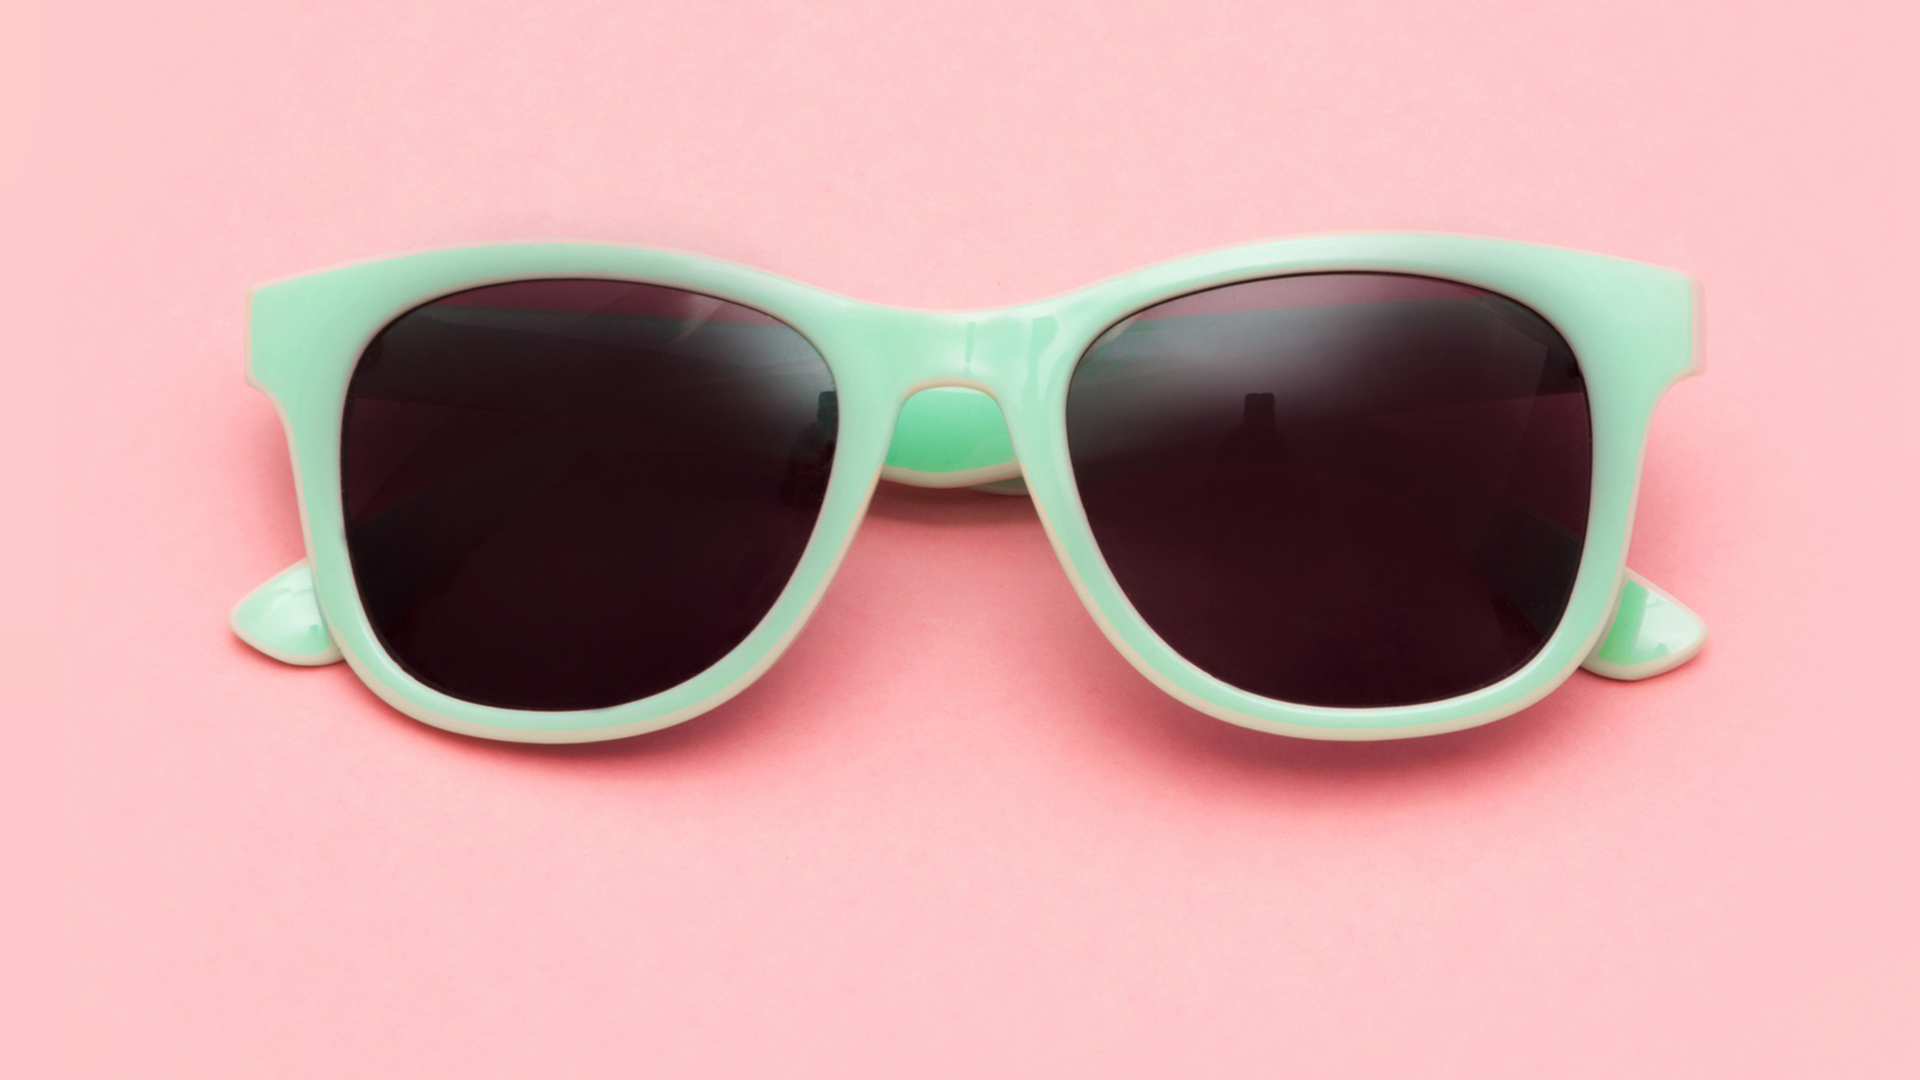 Mint coloured sunglasses